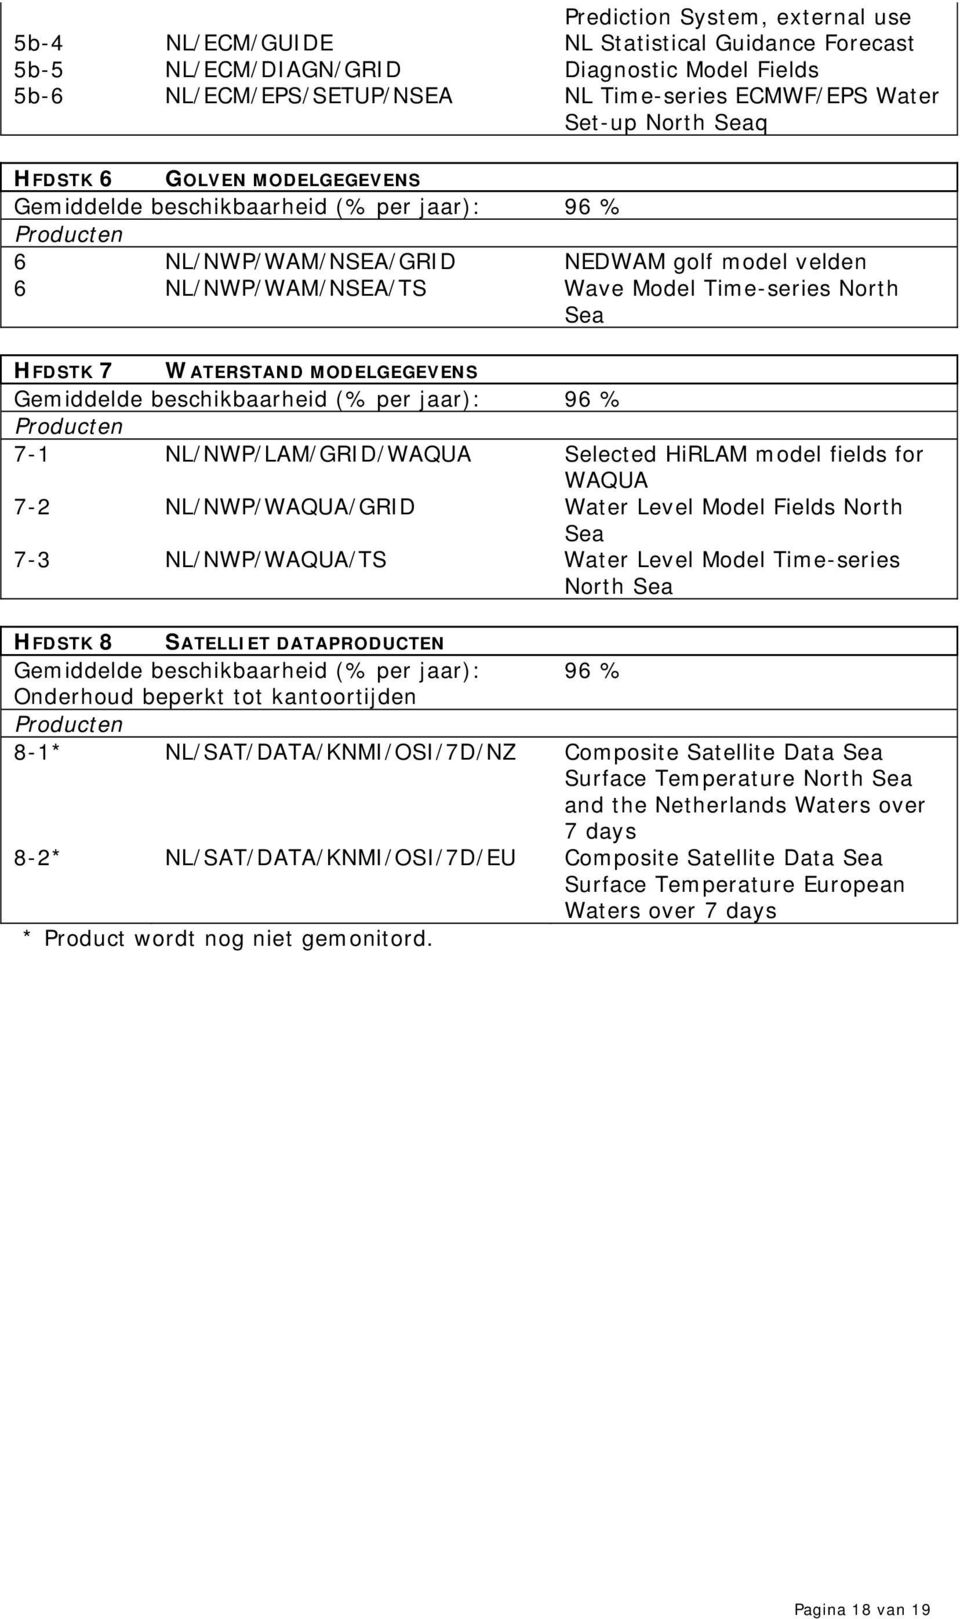 HFDSTK 7 WATERSTAND MODELGEGEVENS Gemiddelde beschikbaarheid (% per jaar): 96 % Producten 7-1 NL/NWP/LAM/GRID/WAQUA Selected HiRLAM model fields for WAQUA 7-2 NL/NWP/WAQUA/GRID Water Level Model